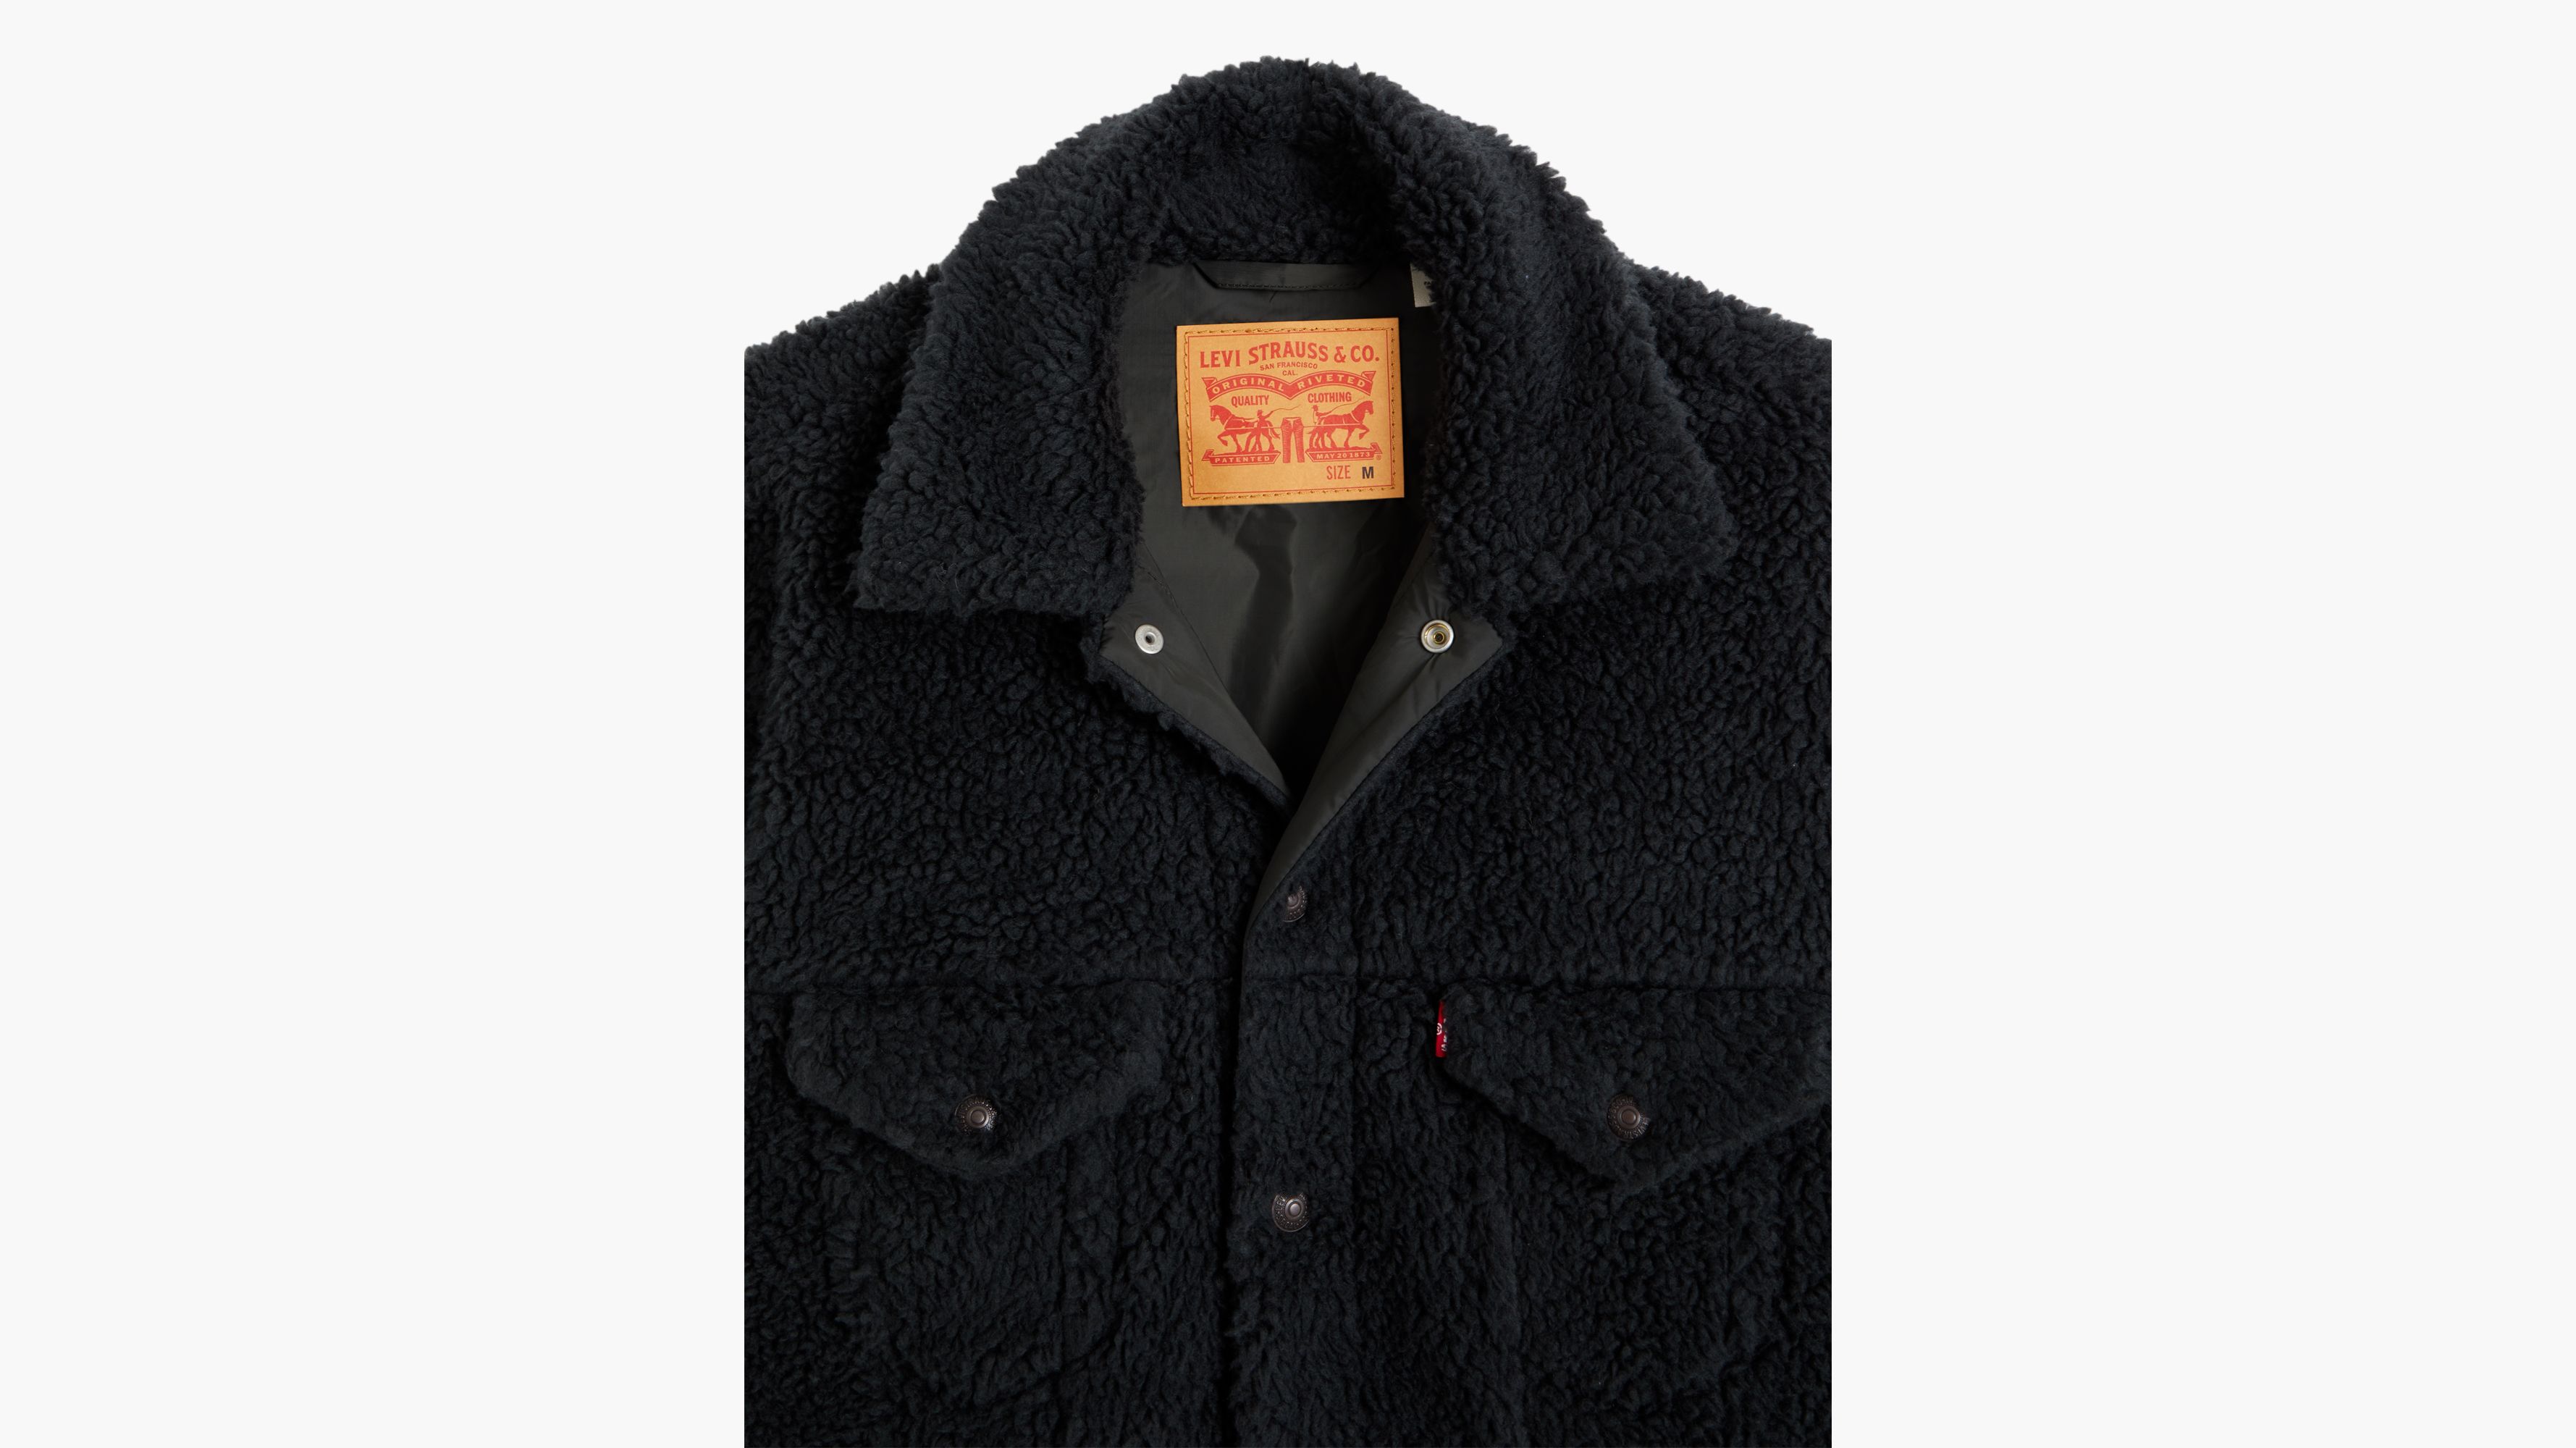 Levi's® Vintage Clothing Slim Fit Trucker Jacket - Grey